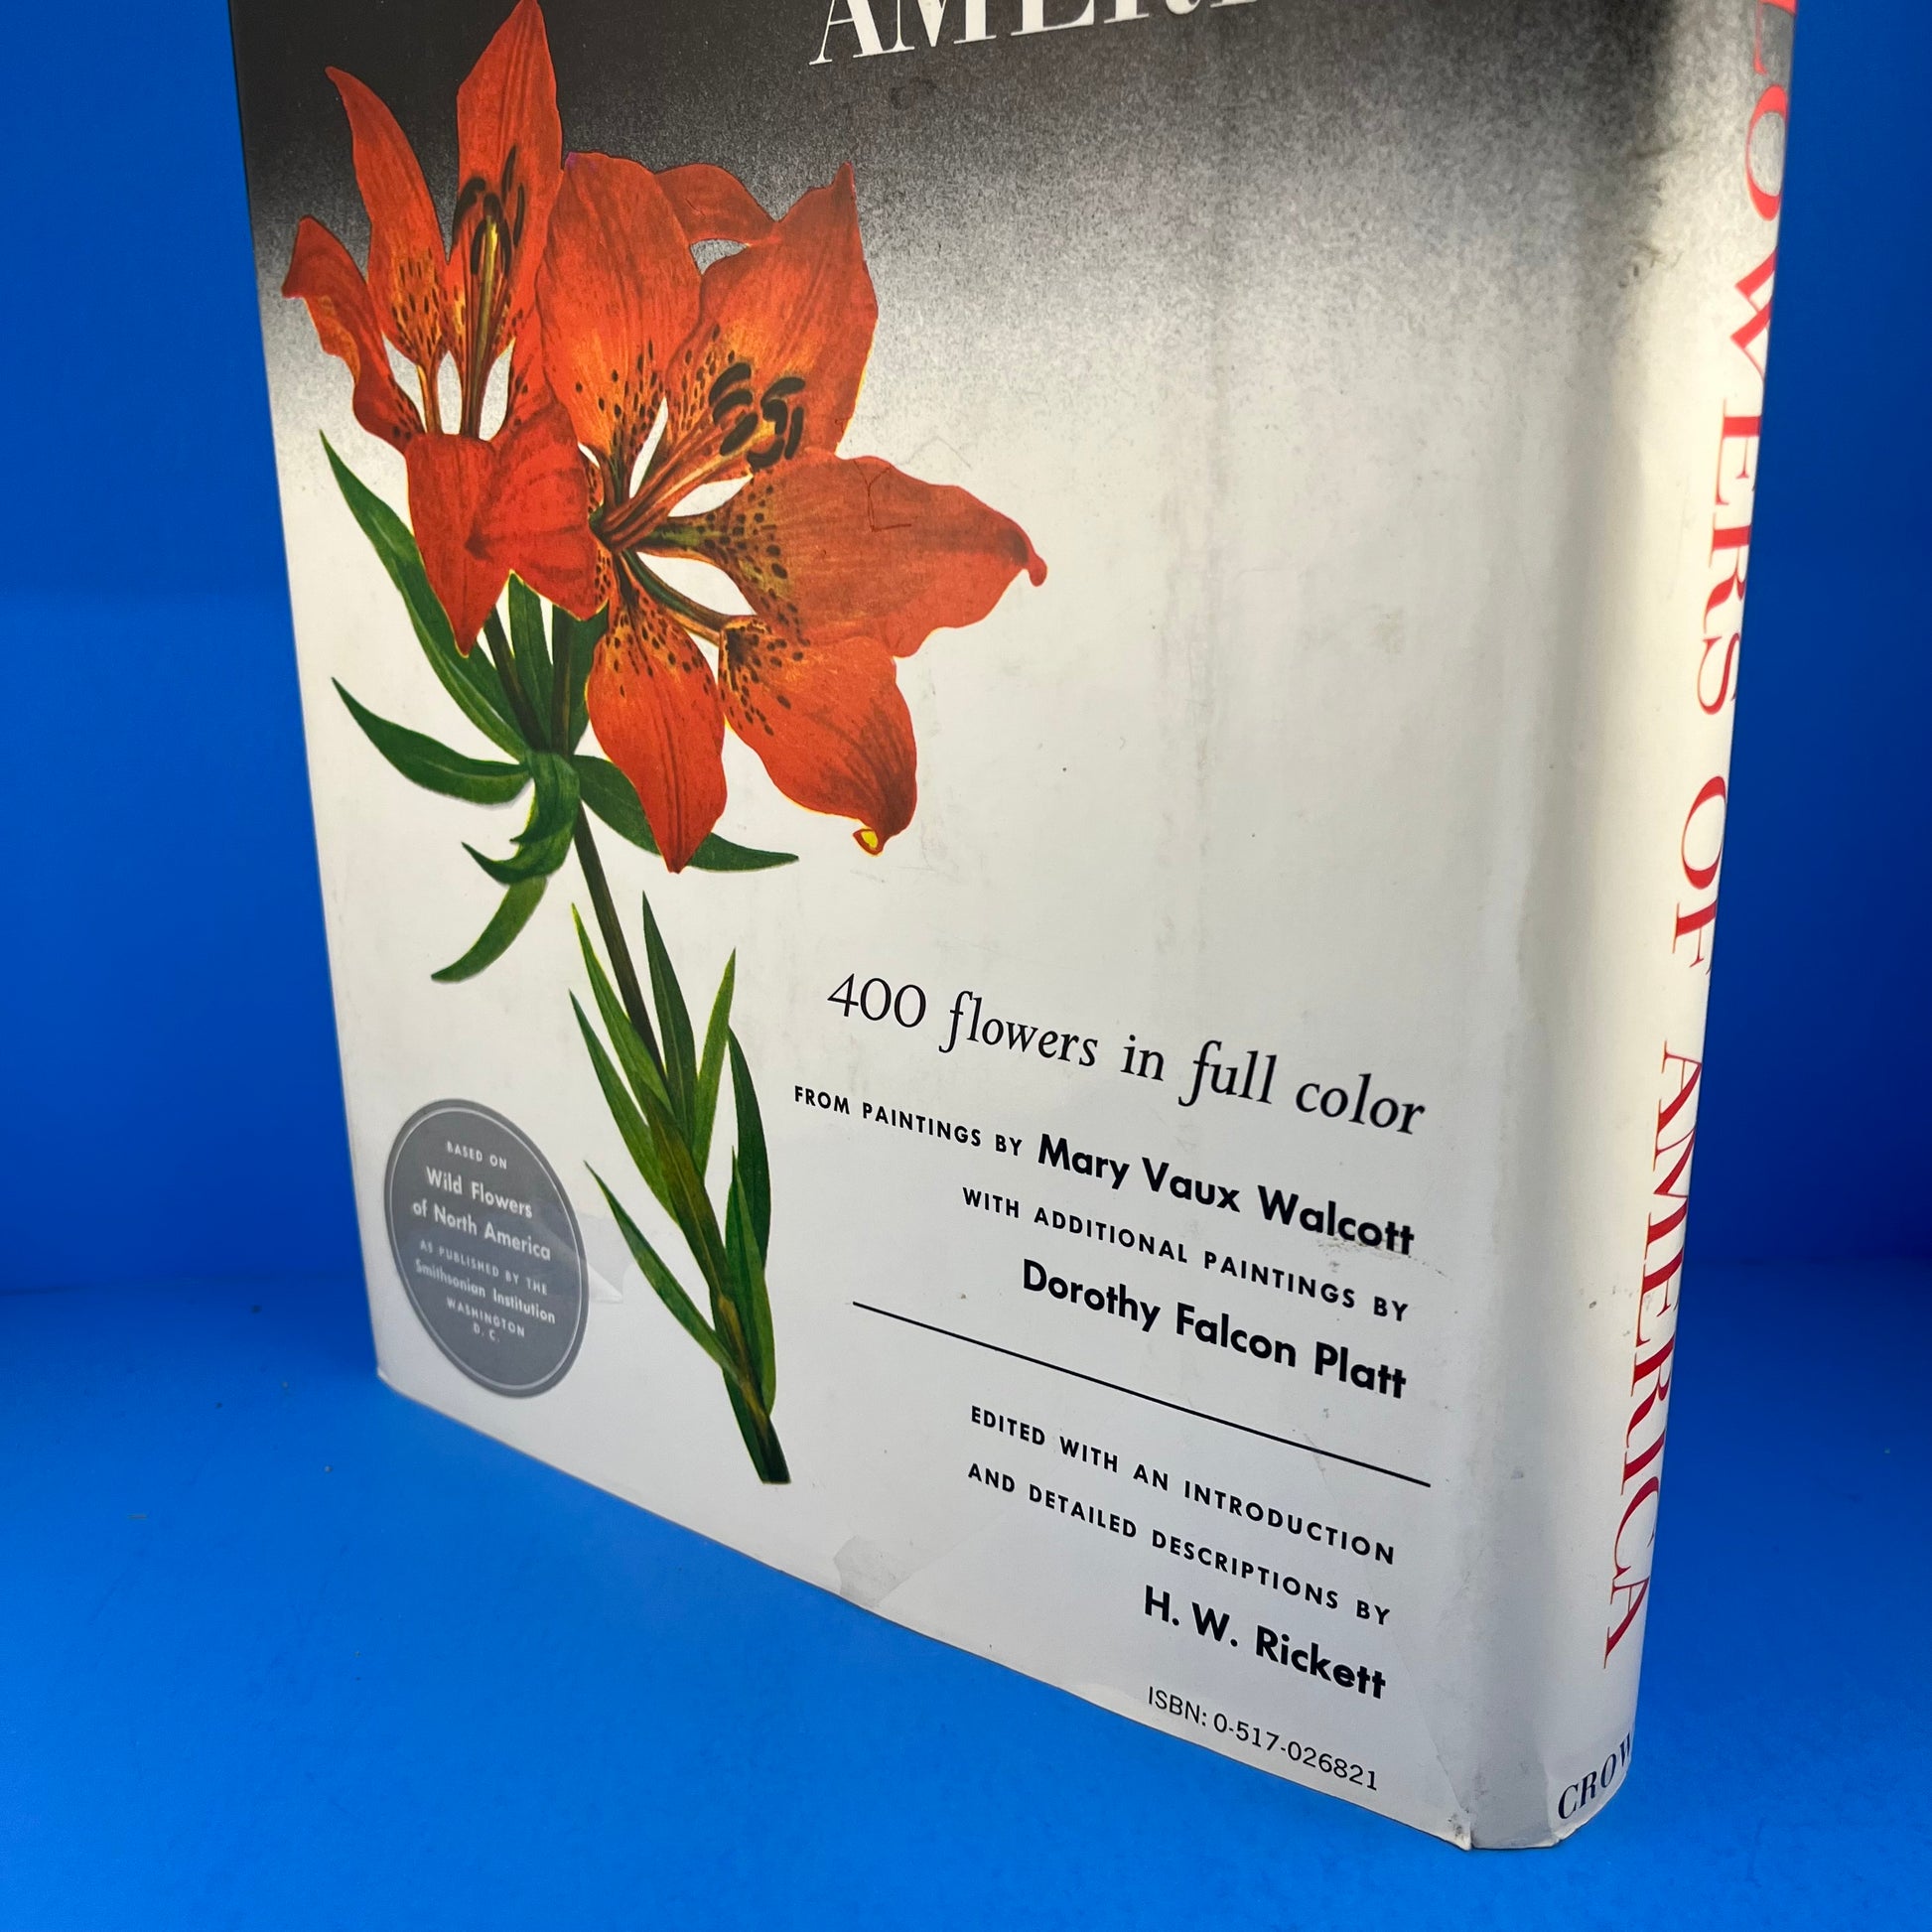 Wild Flowers of North America: 9783791388892 | : Books